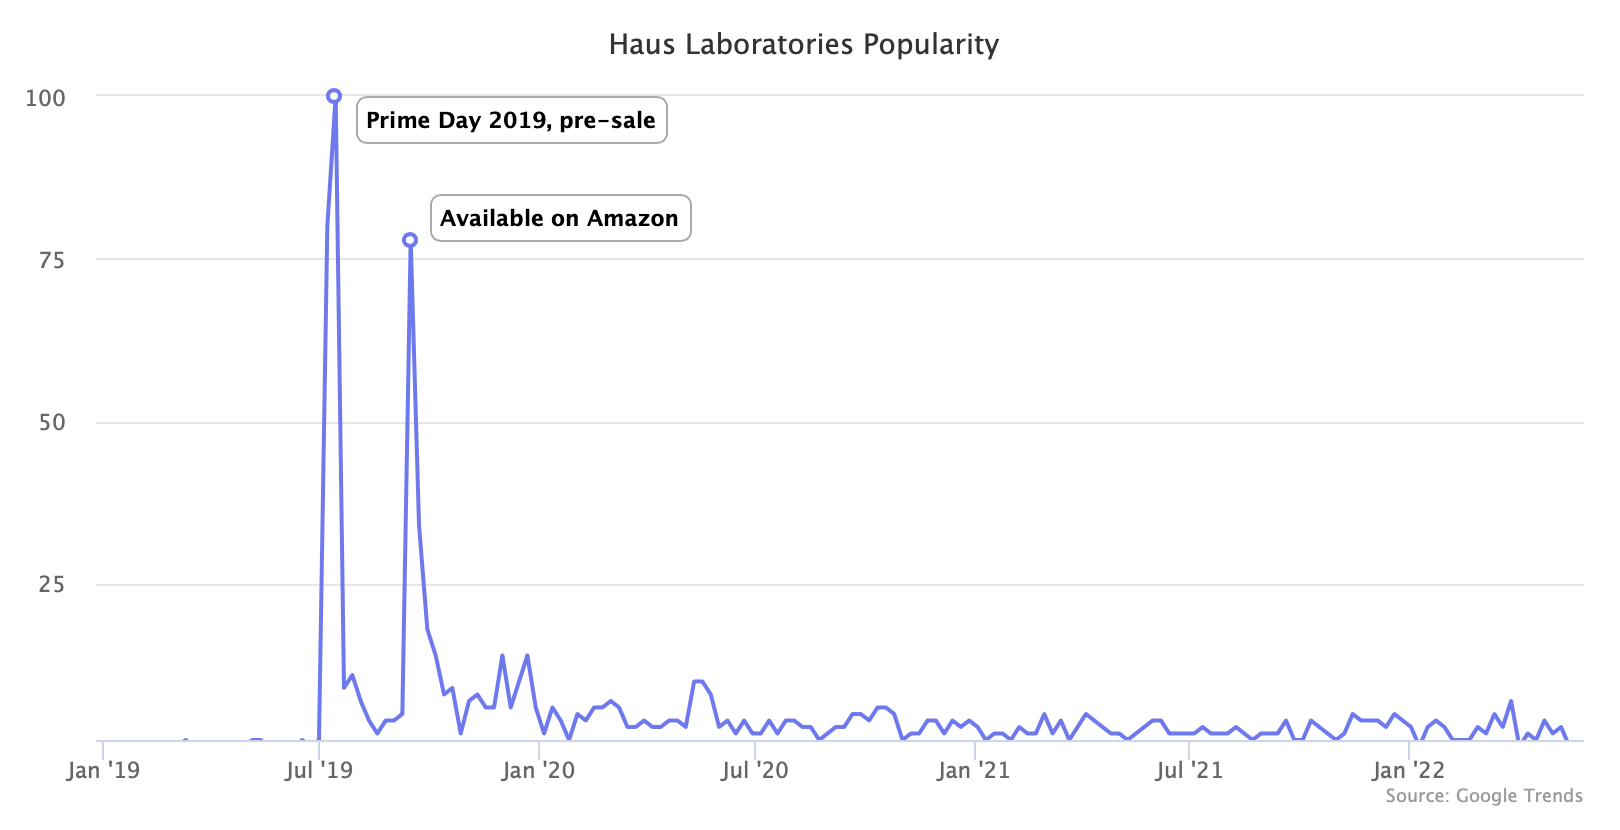 Haus Laboratories brand popularity